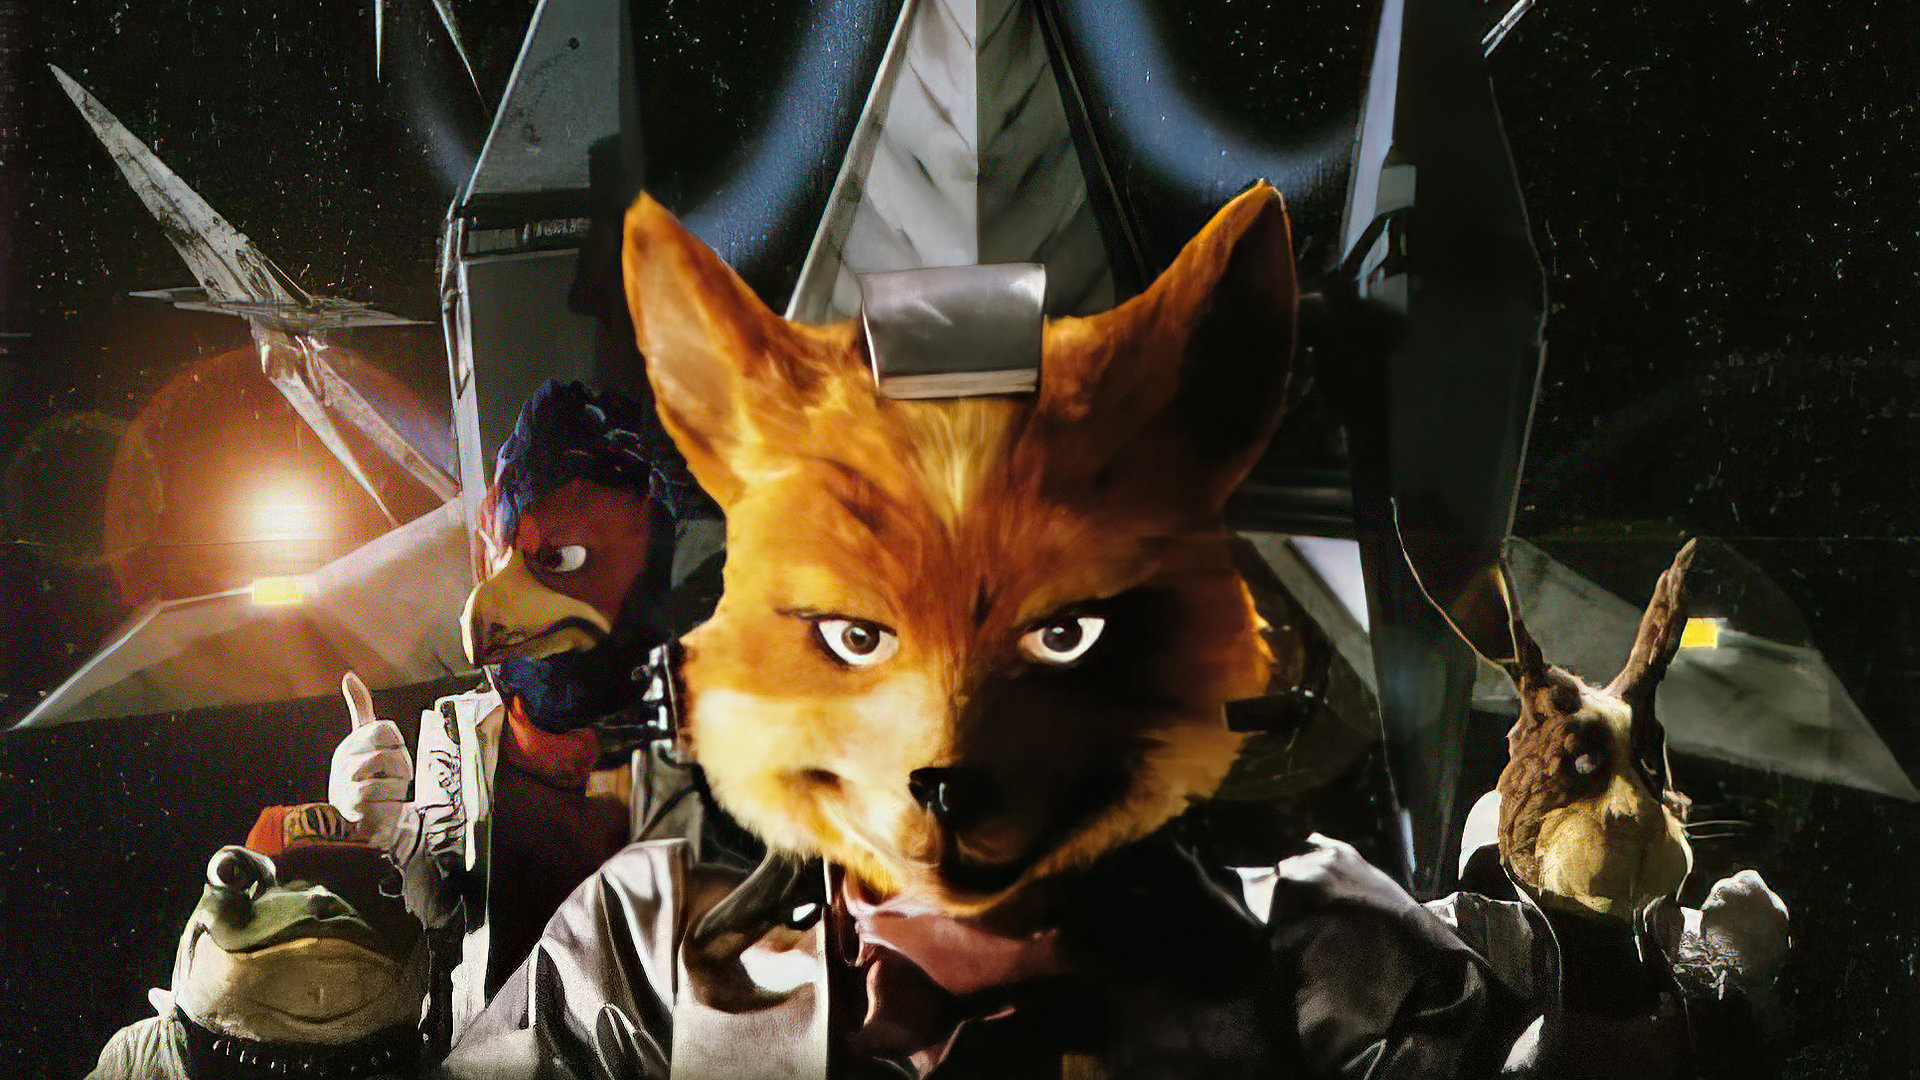 PlatinumGames would definitely like to bring Star Fox Zero to